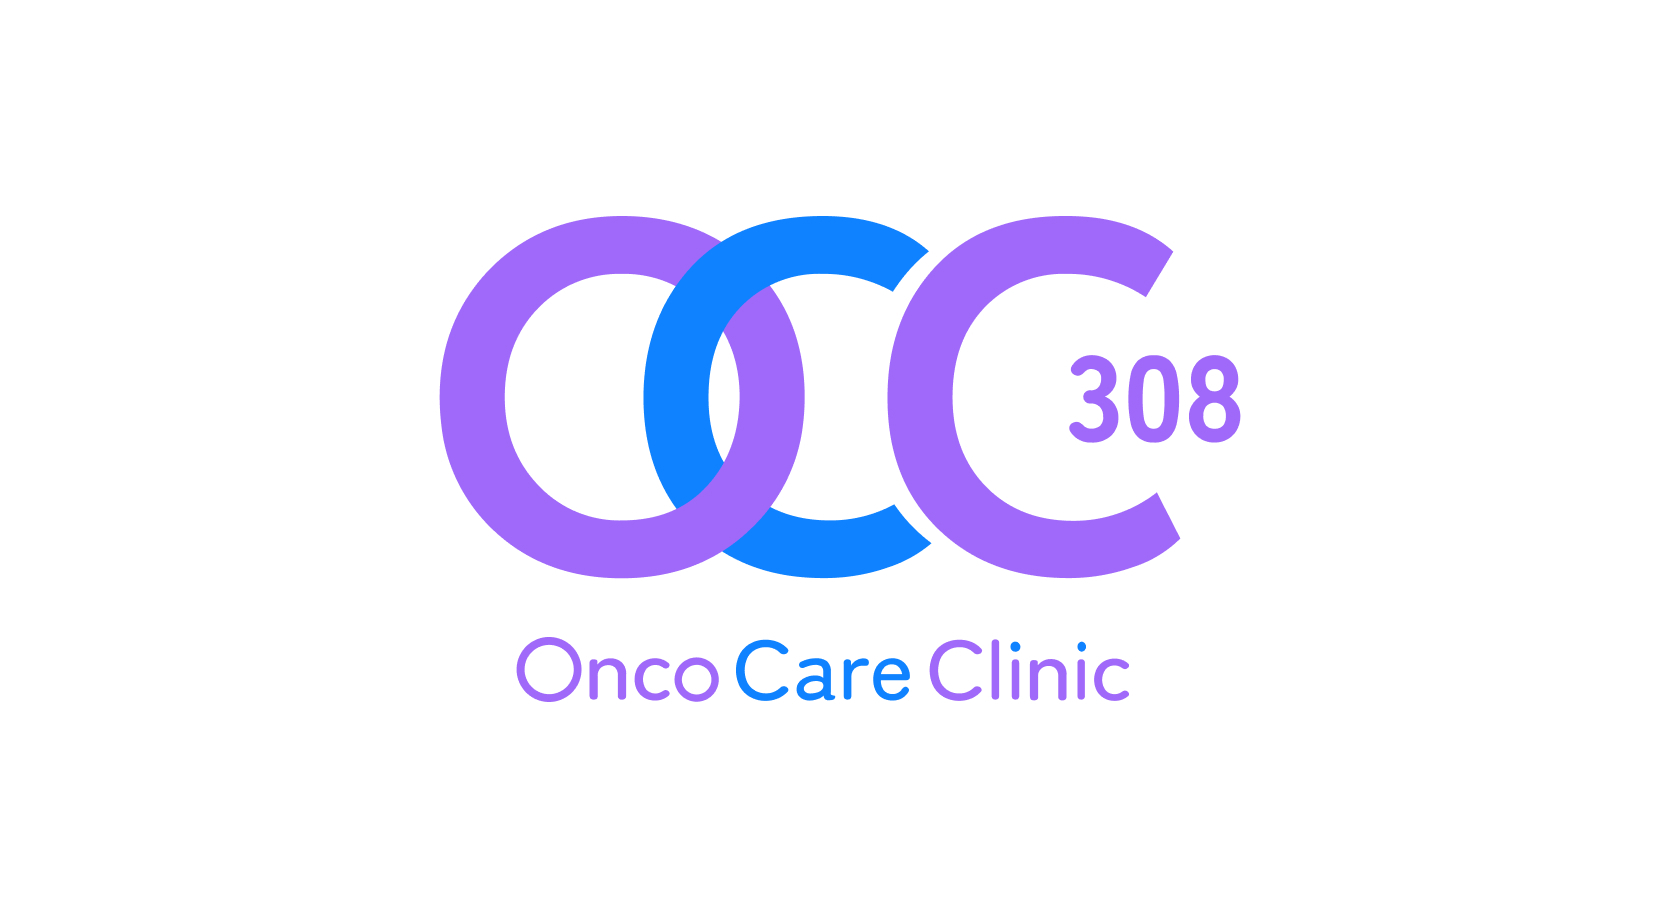 Логотип компании OncoCAREClinic 308